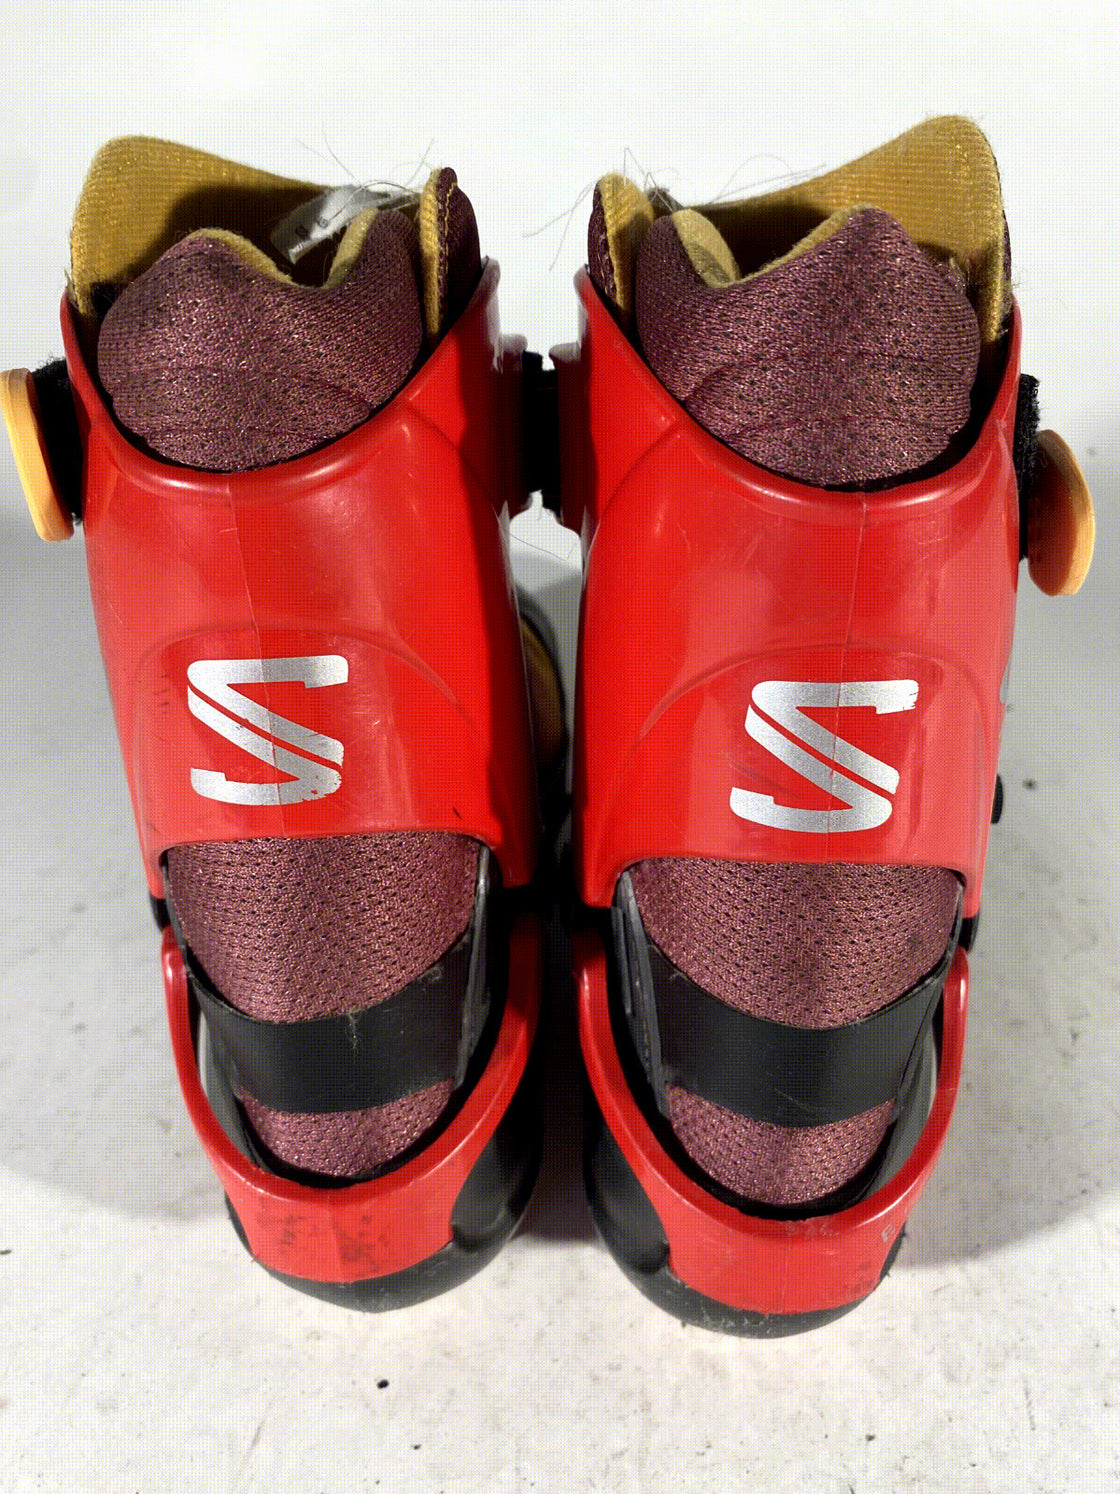 Salomon Skate Nordic Cross Country Ski Boots Size EU40 2/3 US7.5 SNS Profil